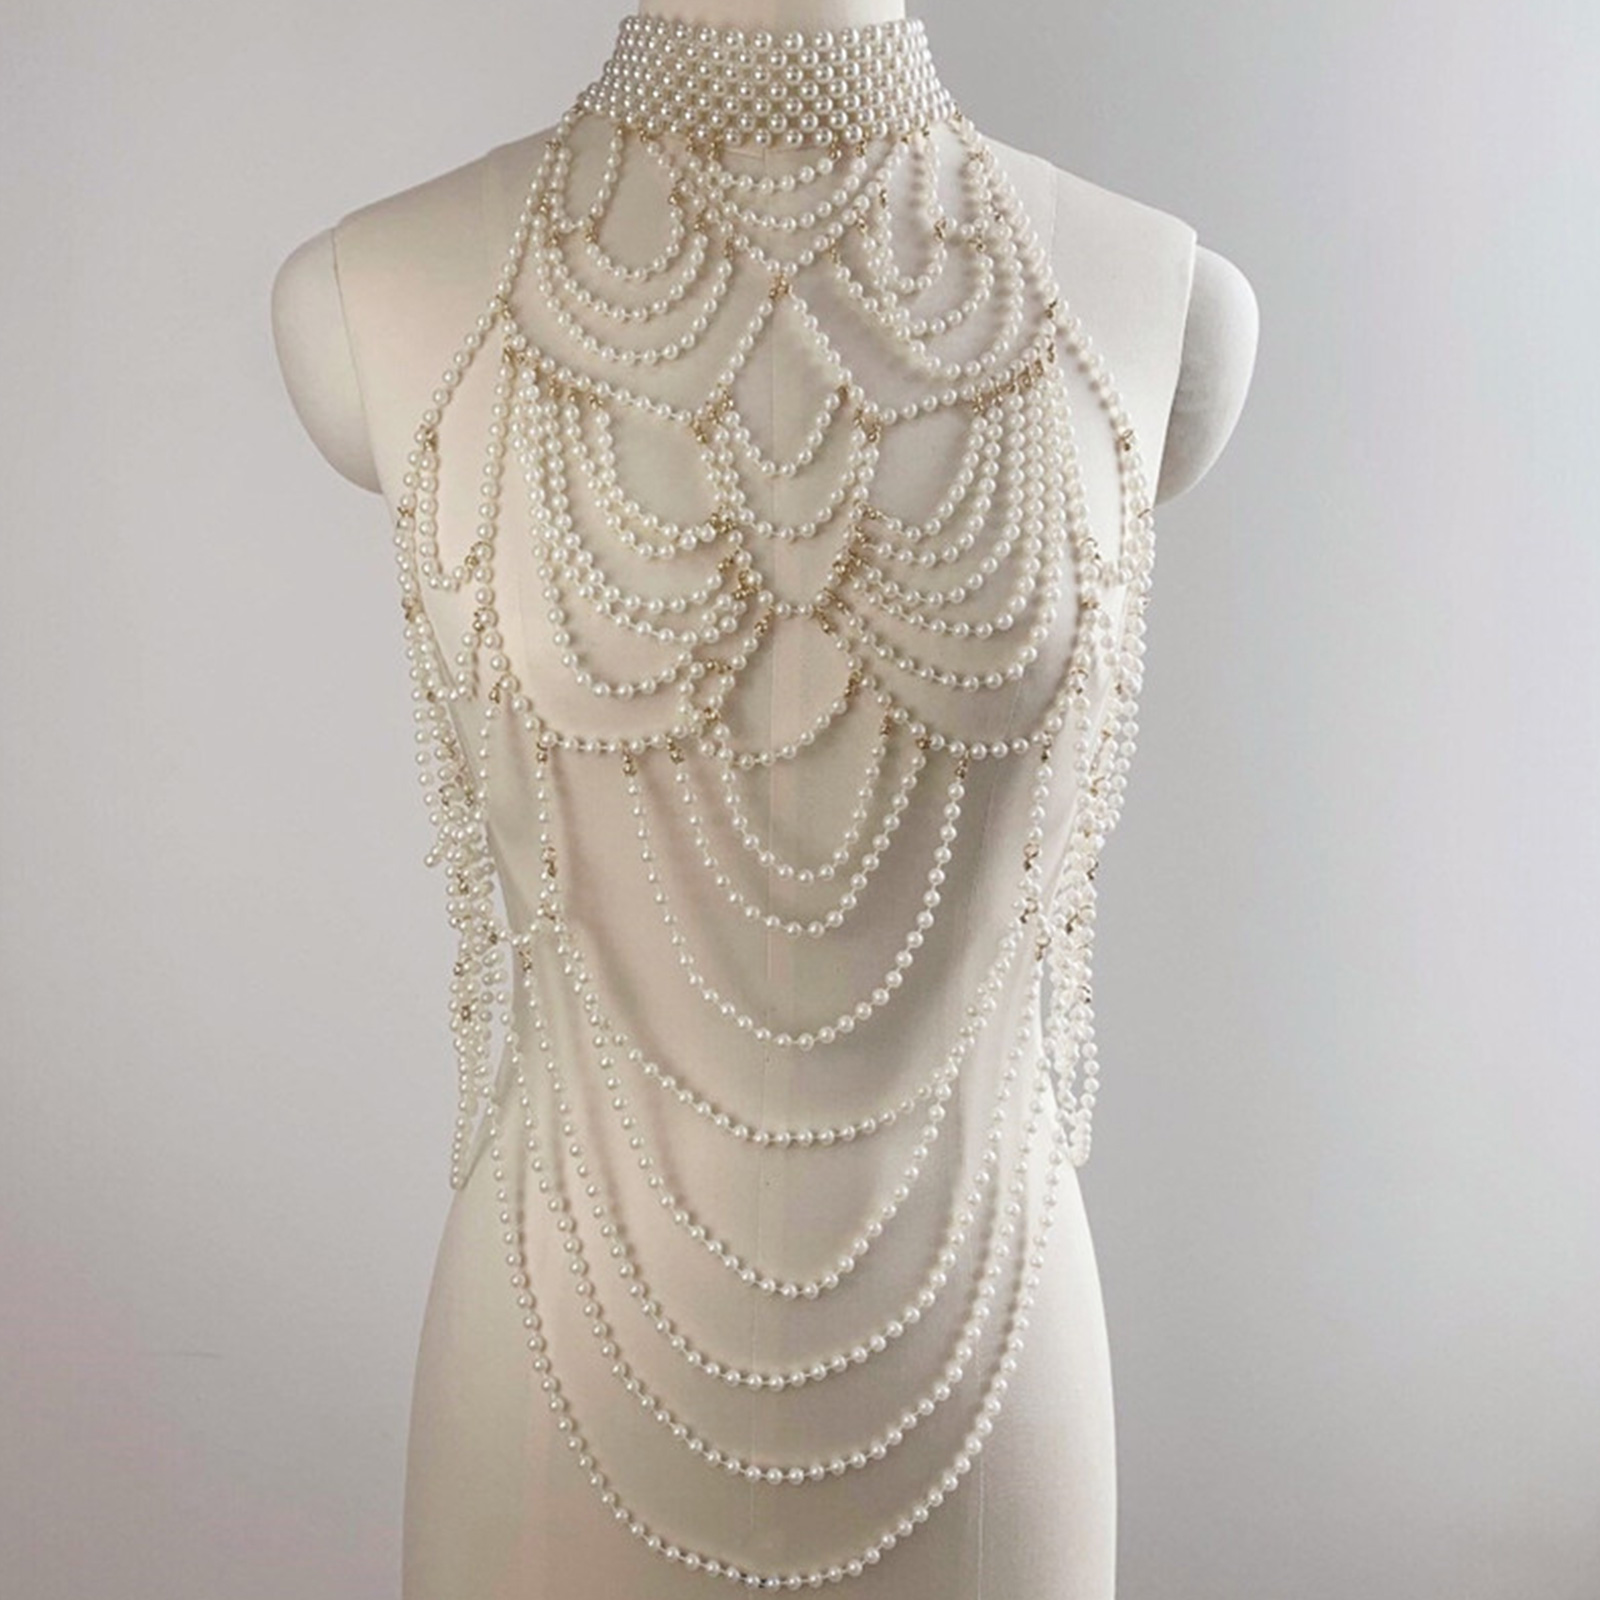 CHAOMA Women Layered Pearl Body Chain Choker Necklace Harness Sexy Bikini Body Jewelry - image 3 of 11